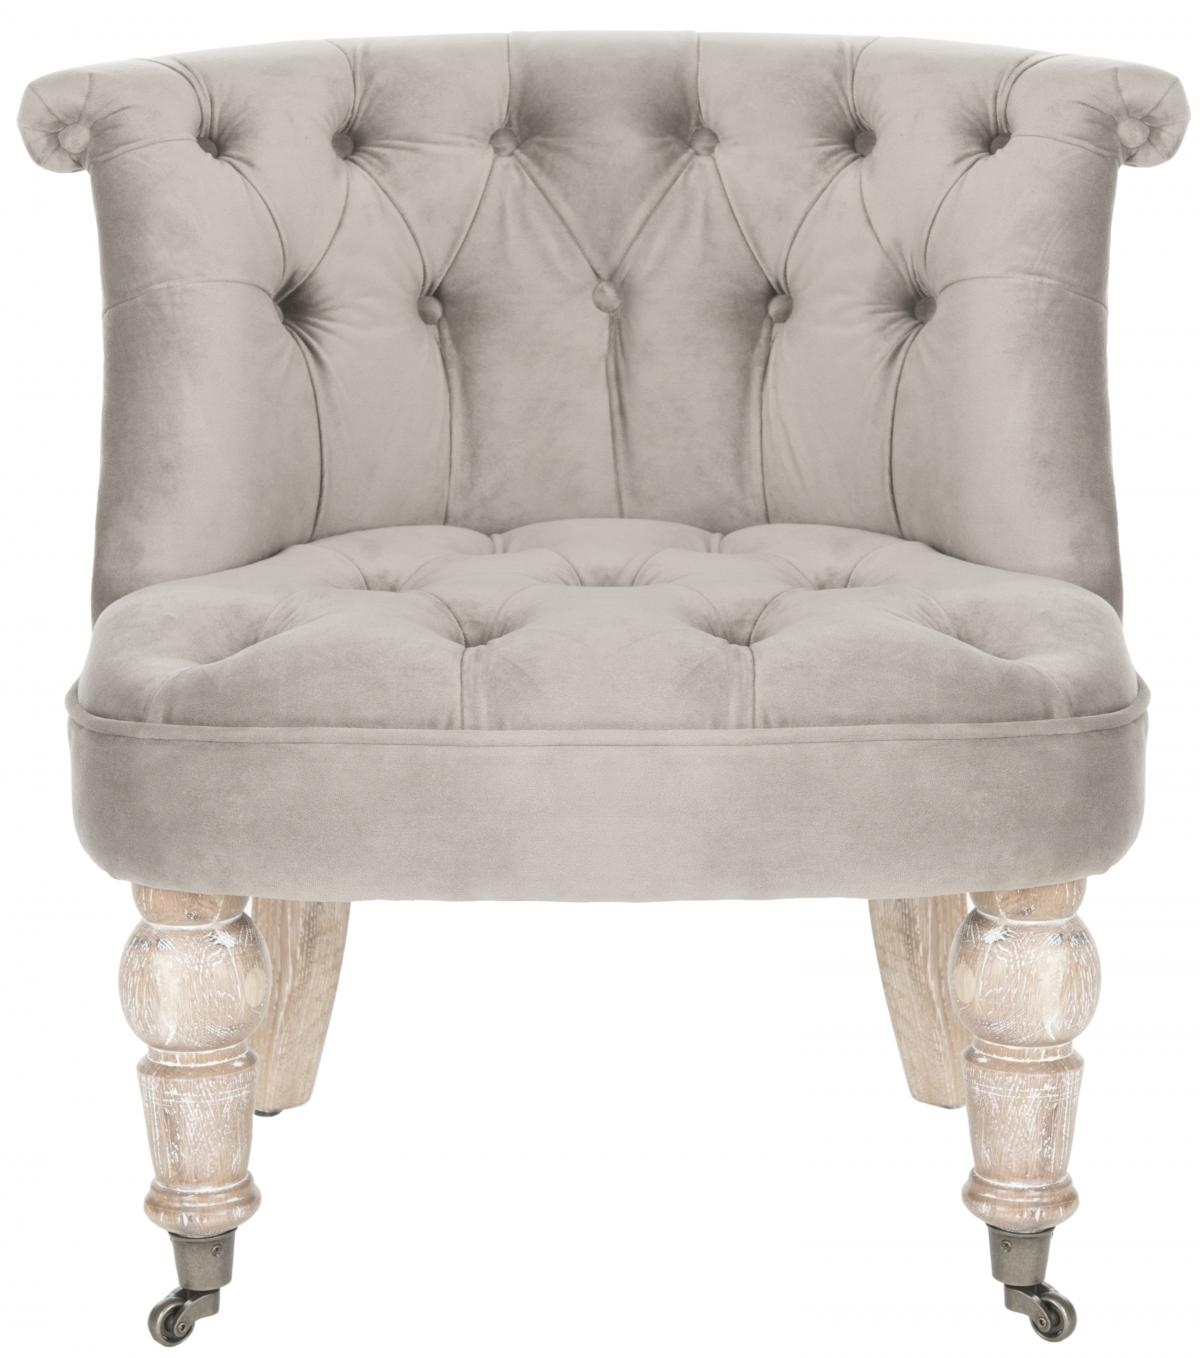 Carlin Tufted Chair - Mushroom Taupe/White Wash - Arlo Home - Image 0